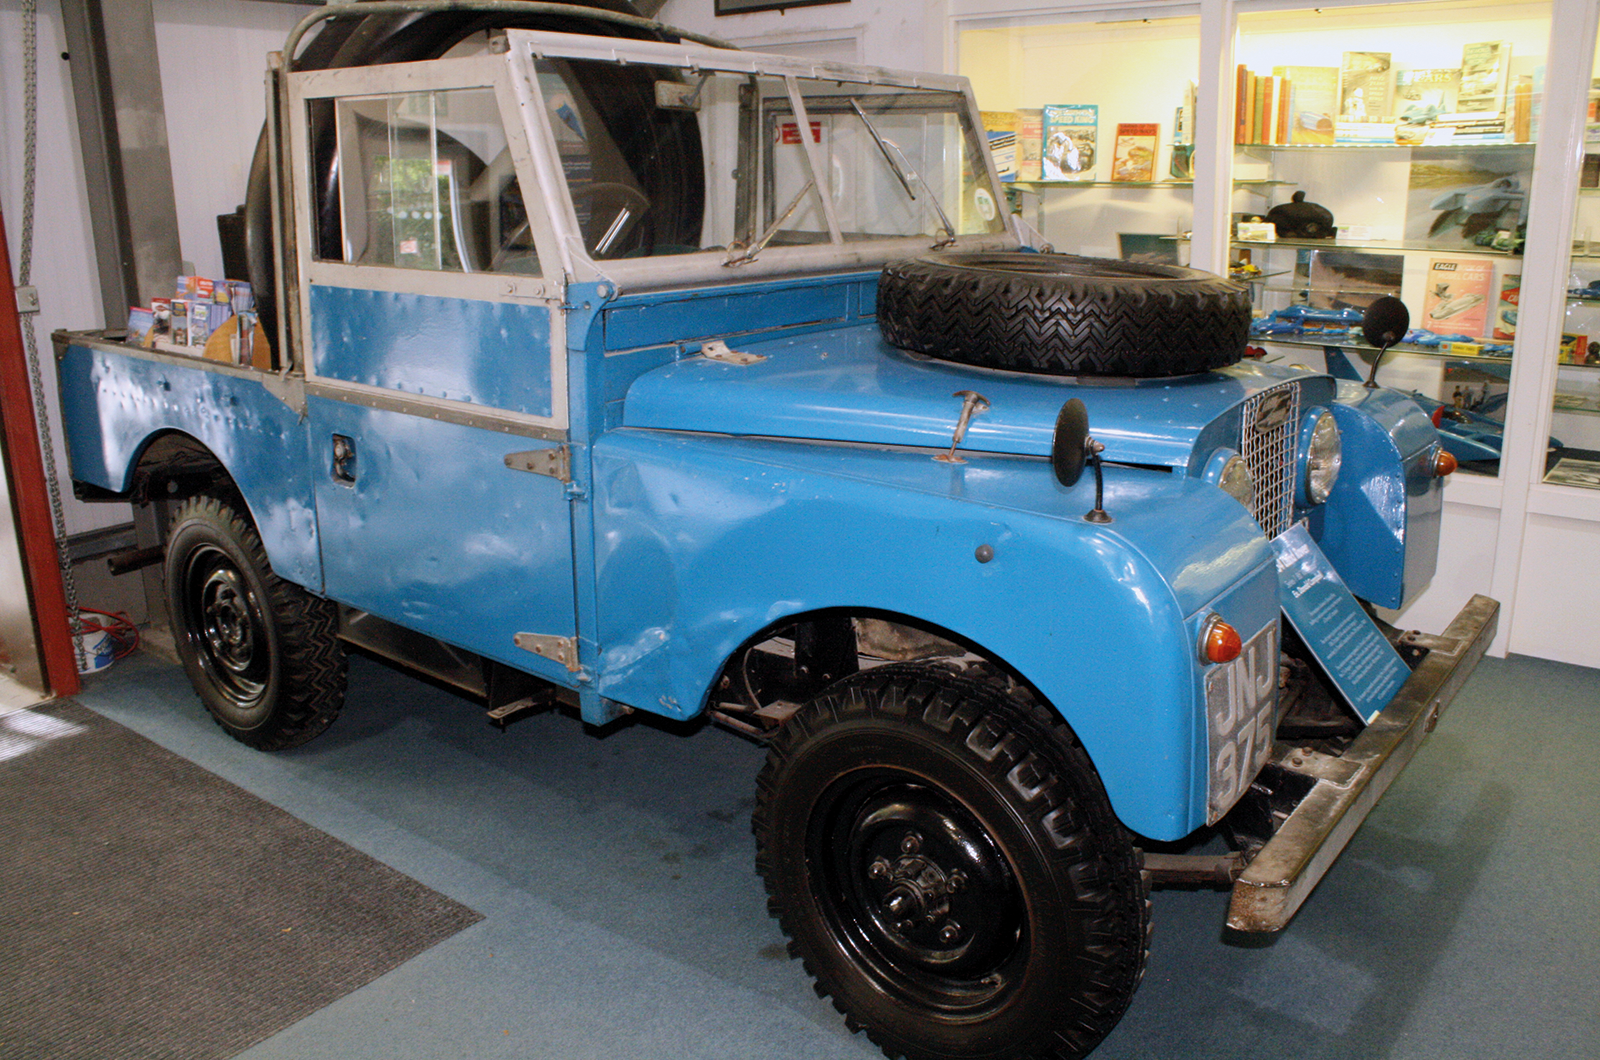 Classic & Sports Car – Classic shrine: Lakeland Motor Museum